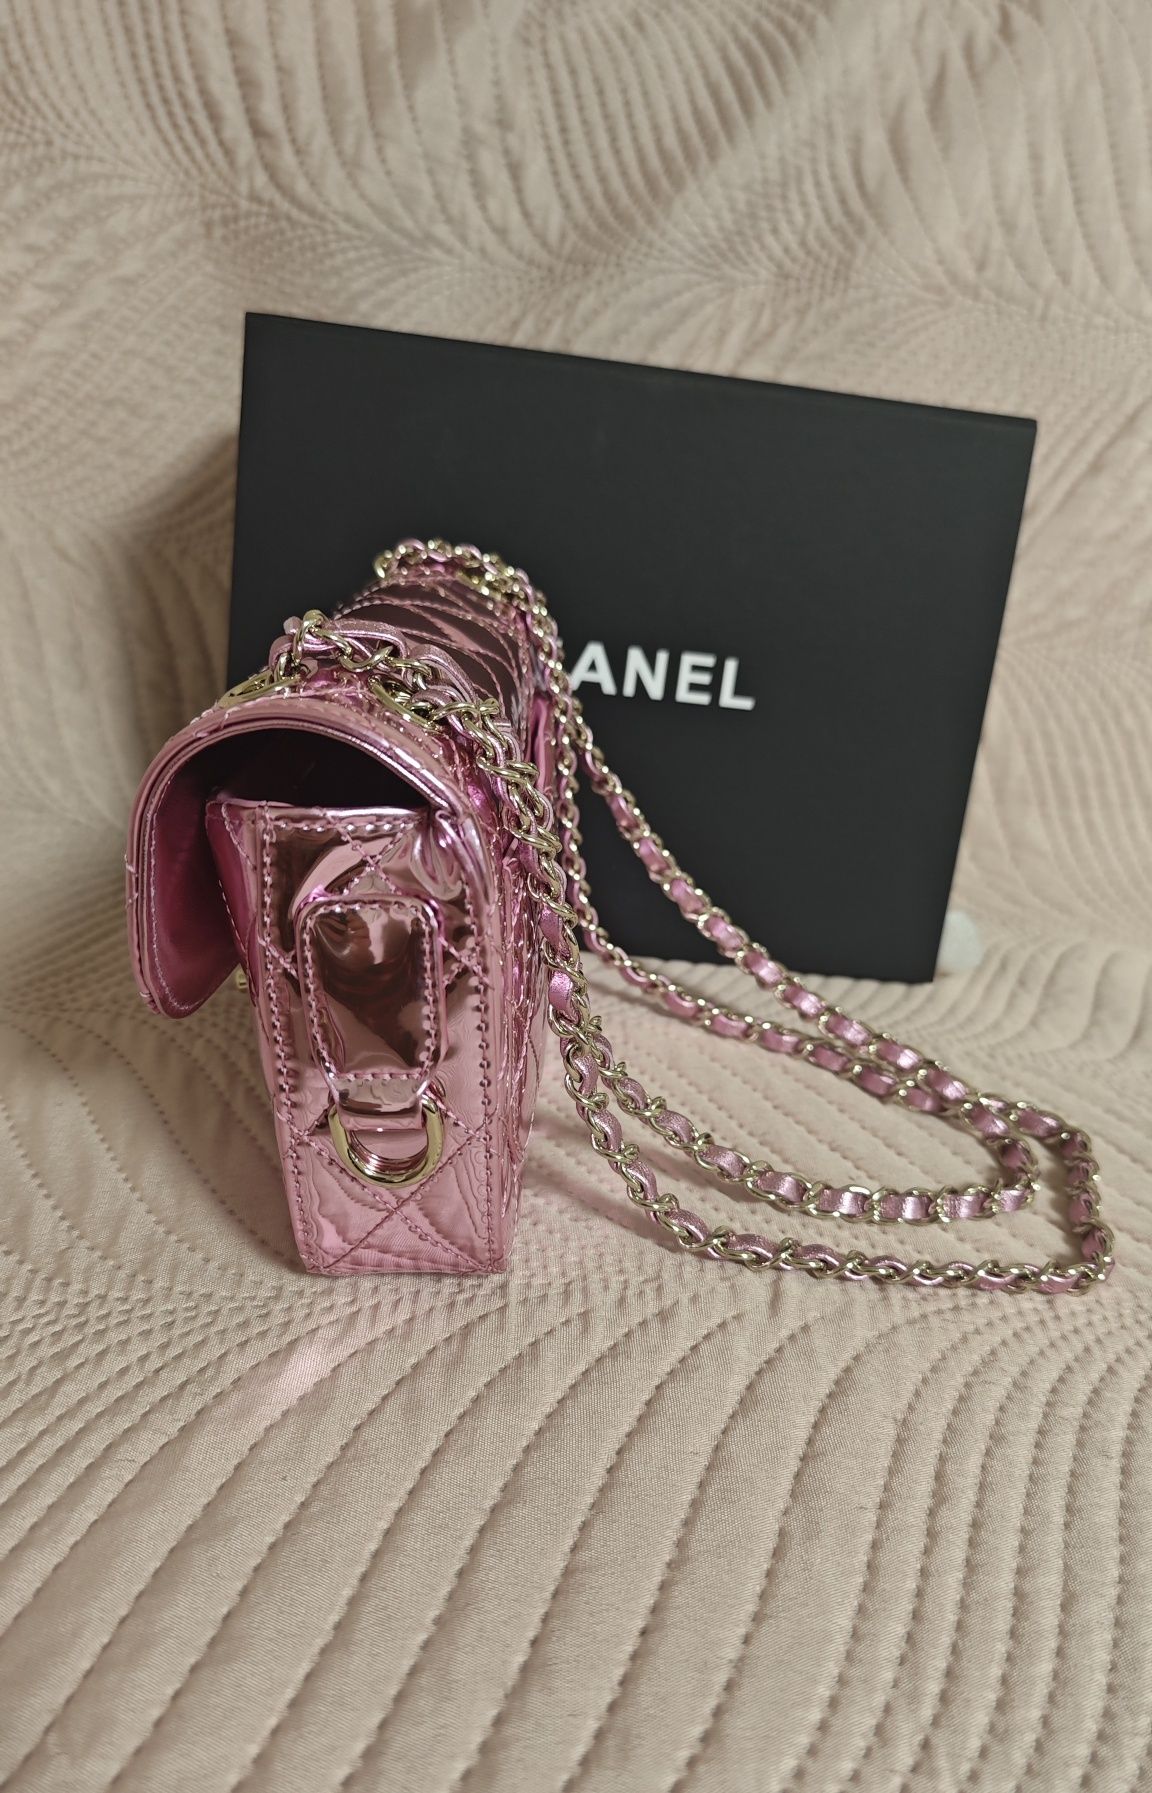 Дамскс чанта Chanel